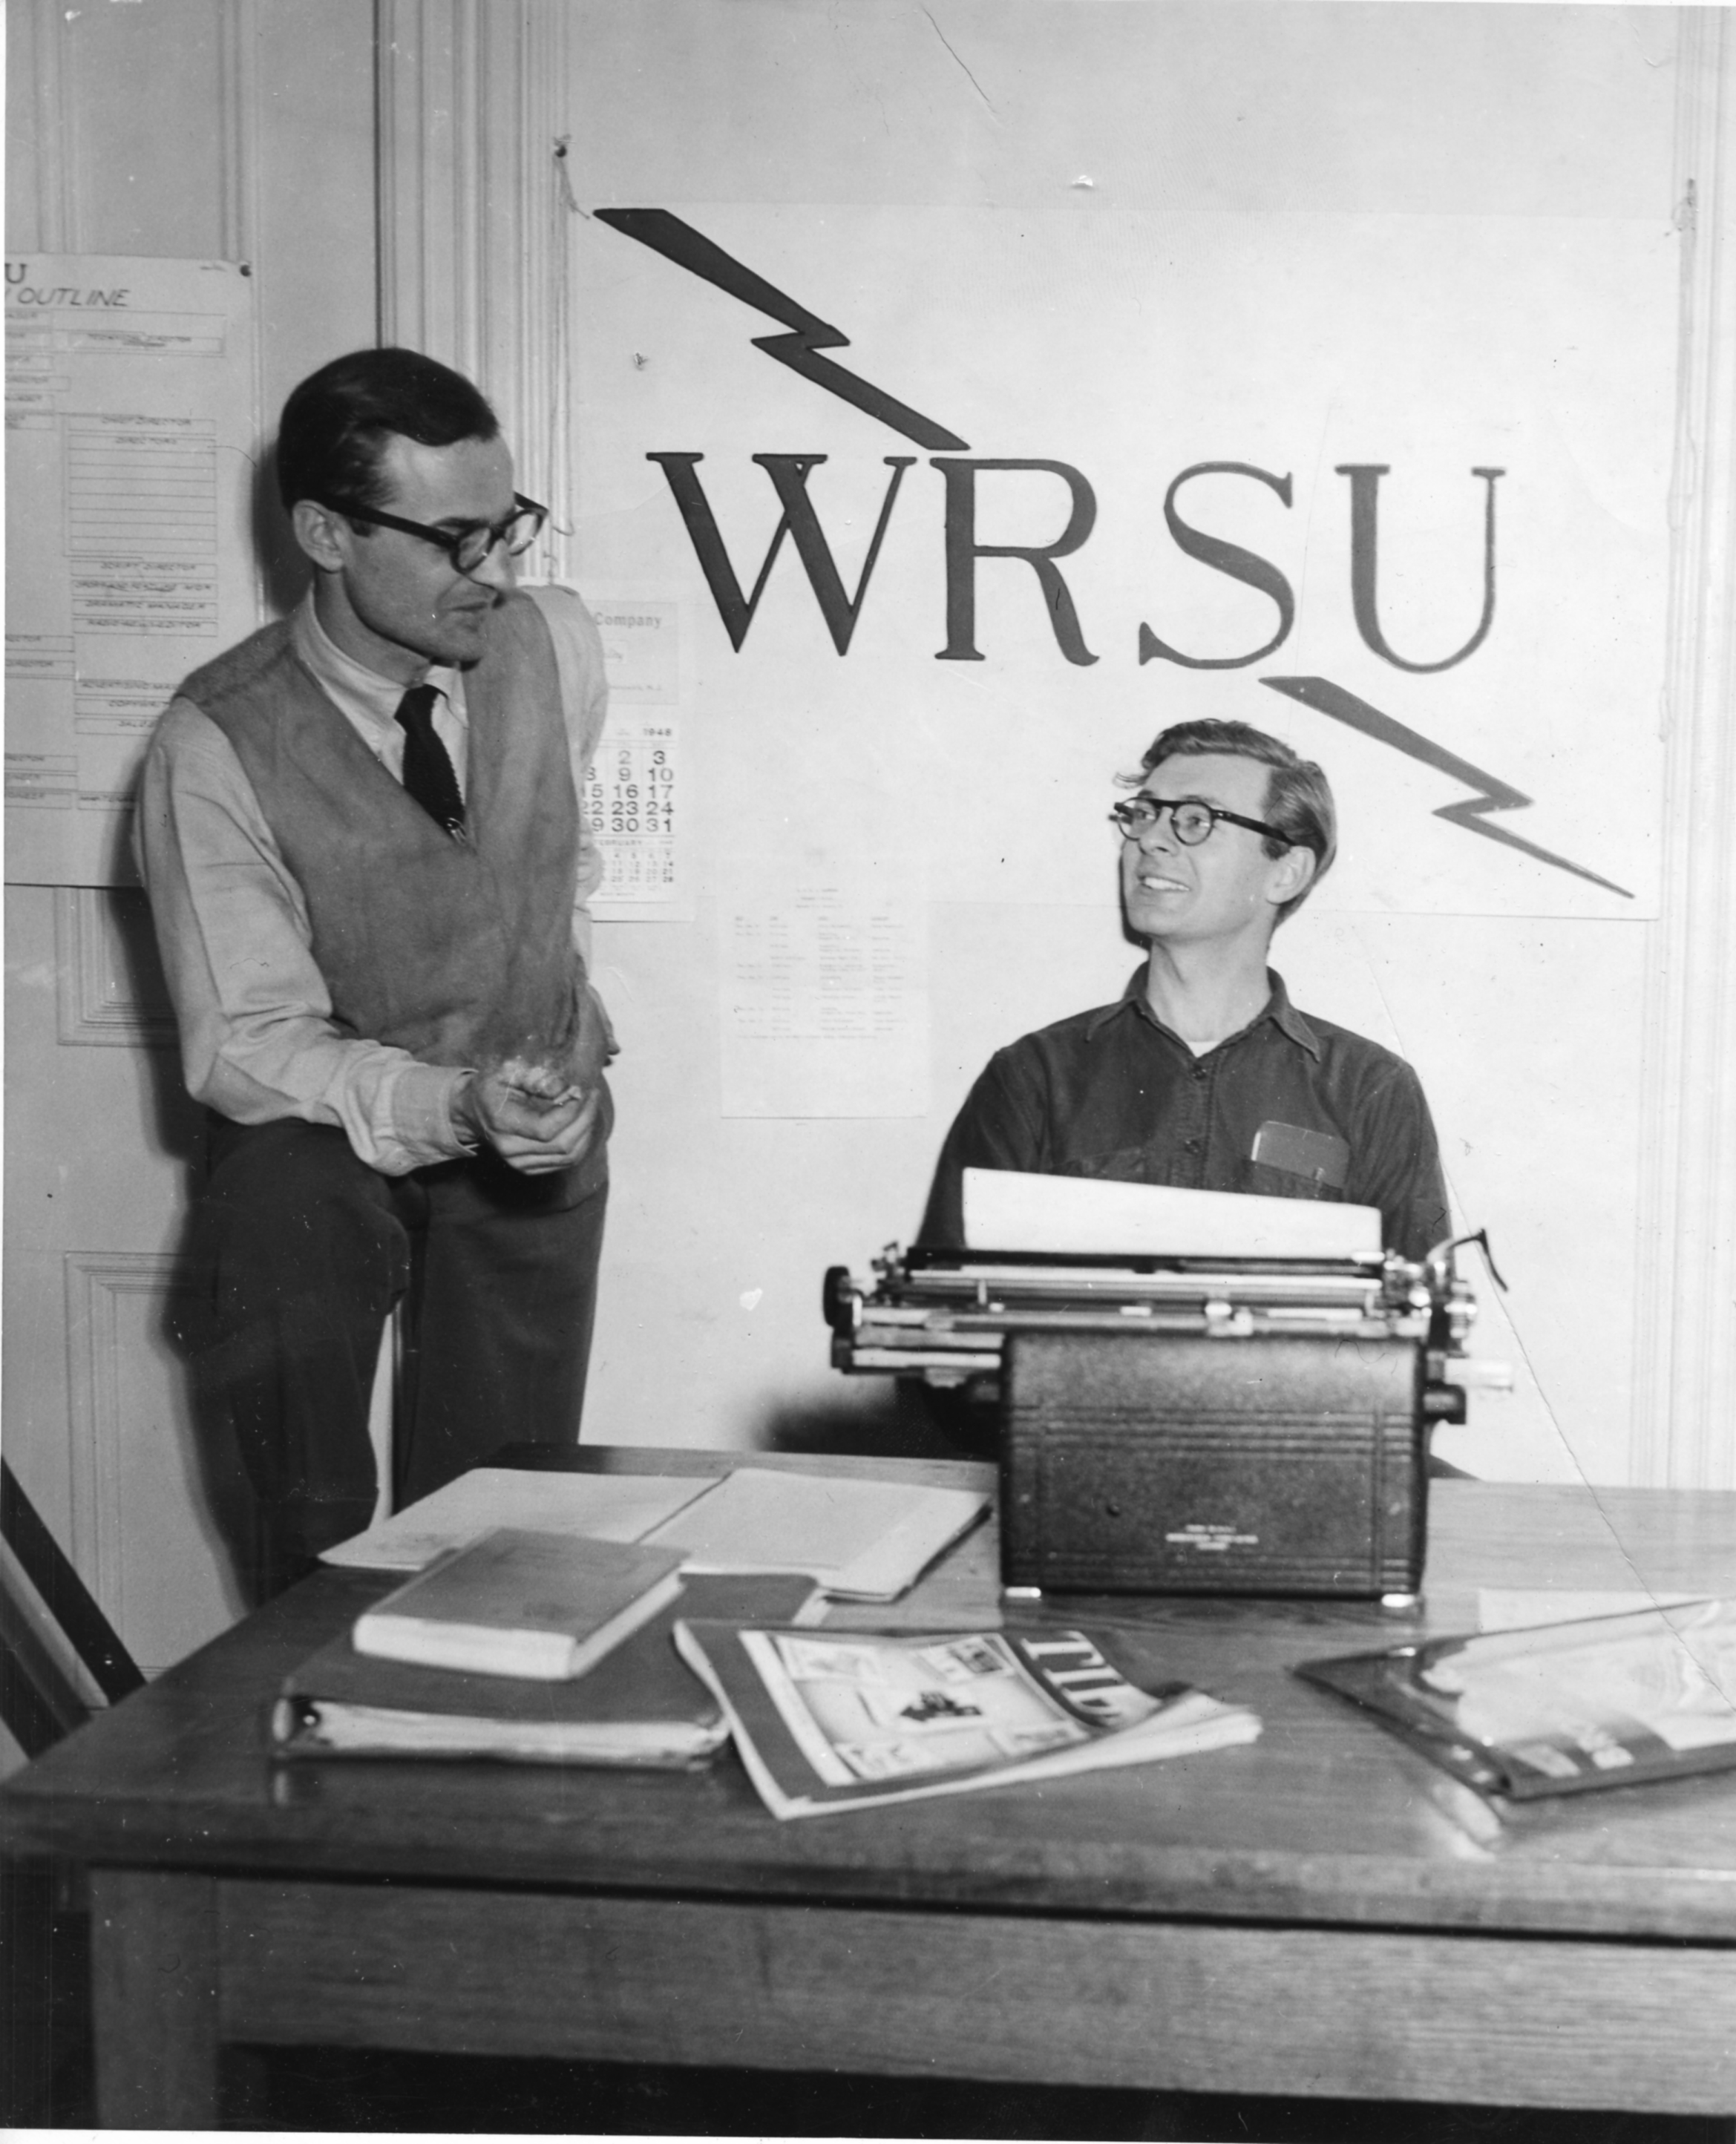 WRSU Logos Through the Years